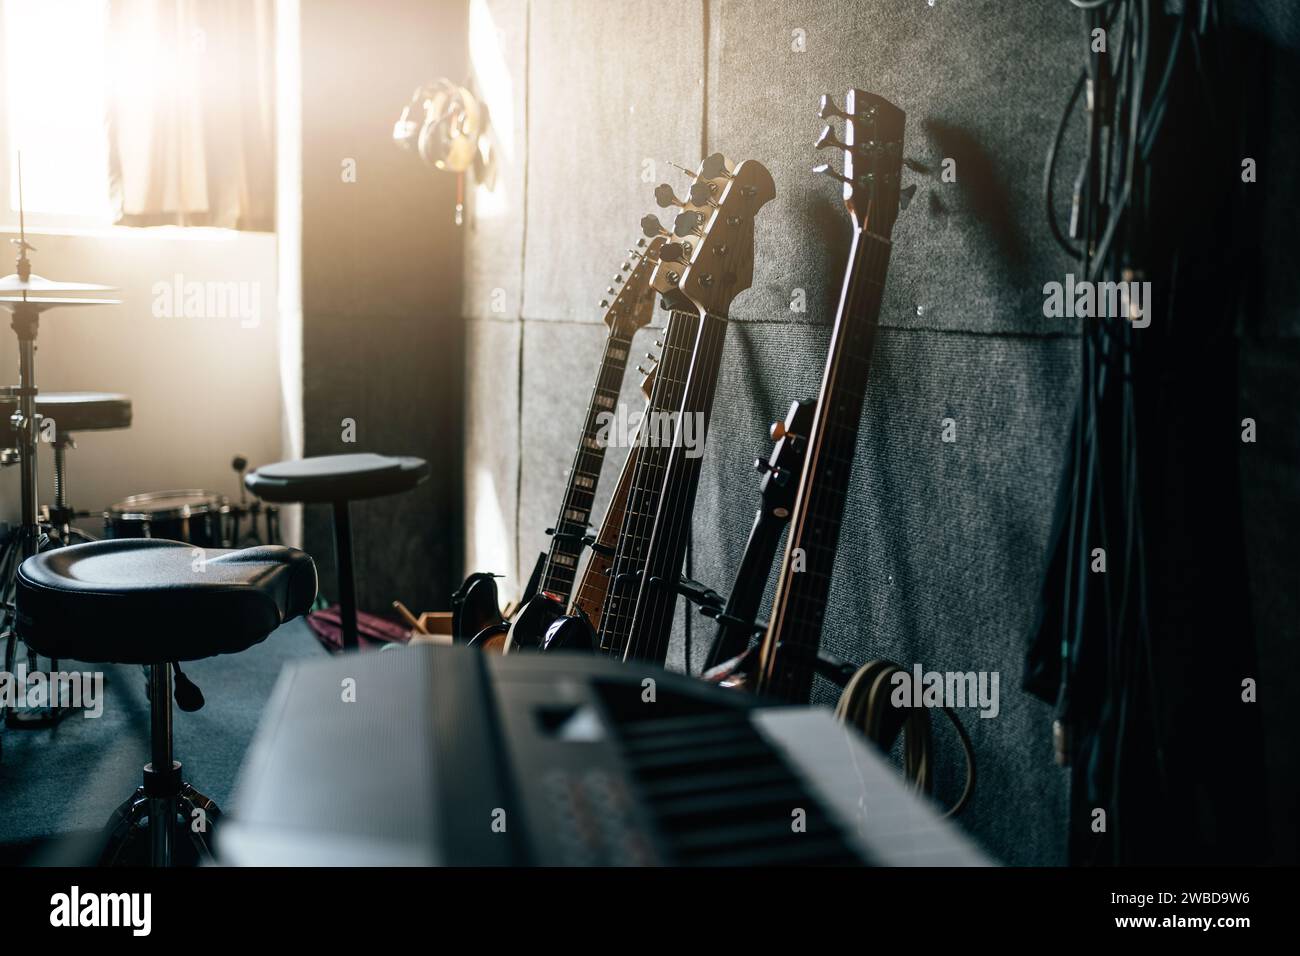 Music instruments in room. Sound recording studio background. Stock Photo